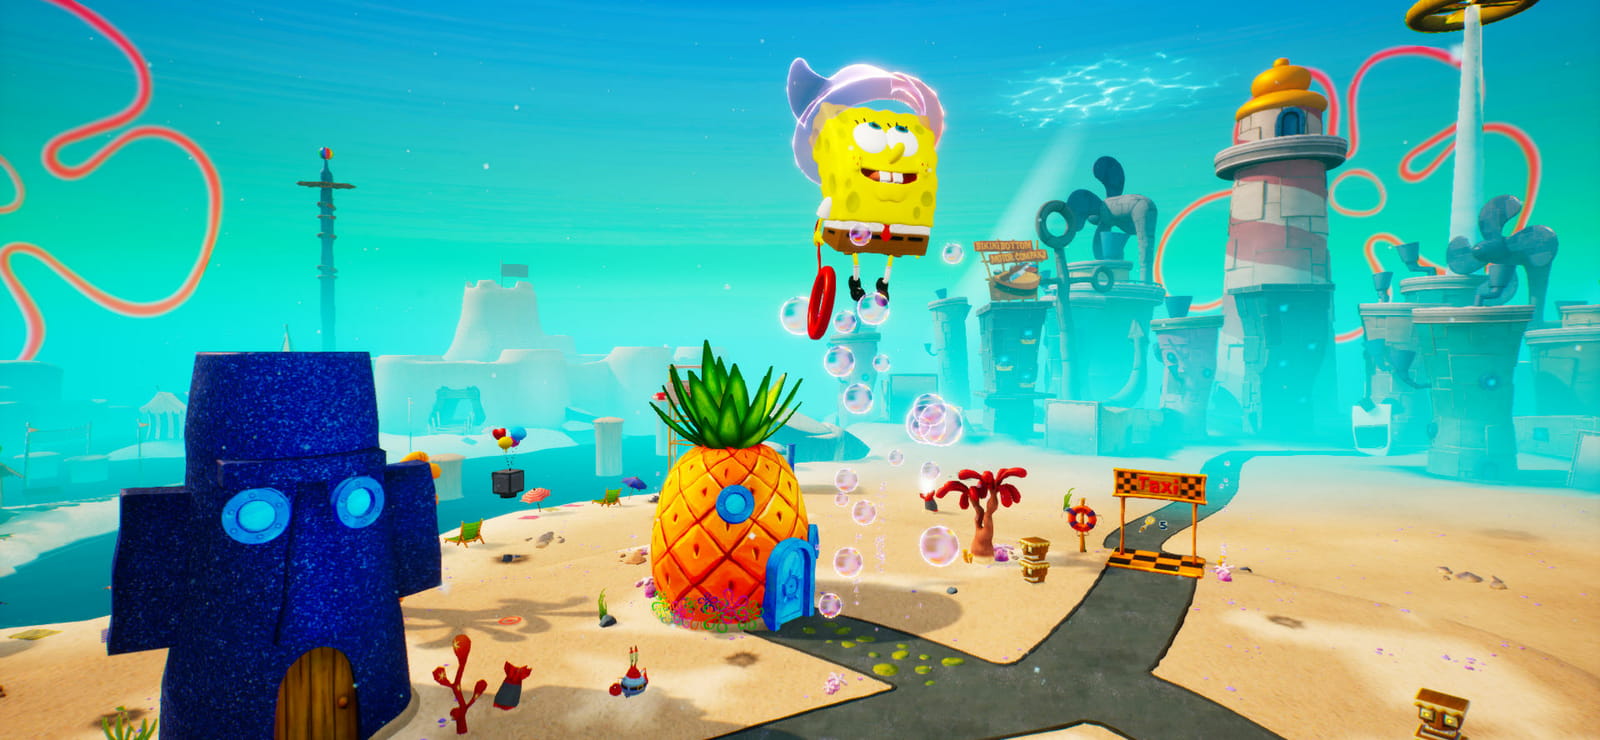 SpongeBob SquarePants: Battle For Bikini Bottom - Rehydrated